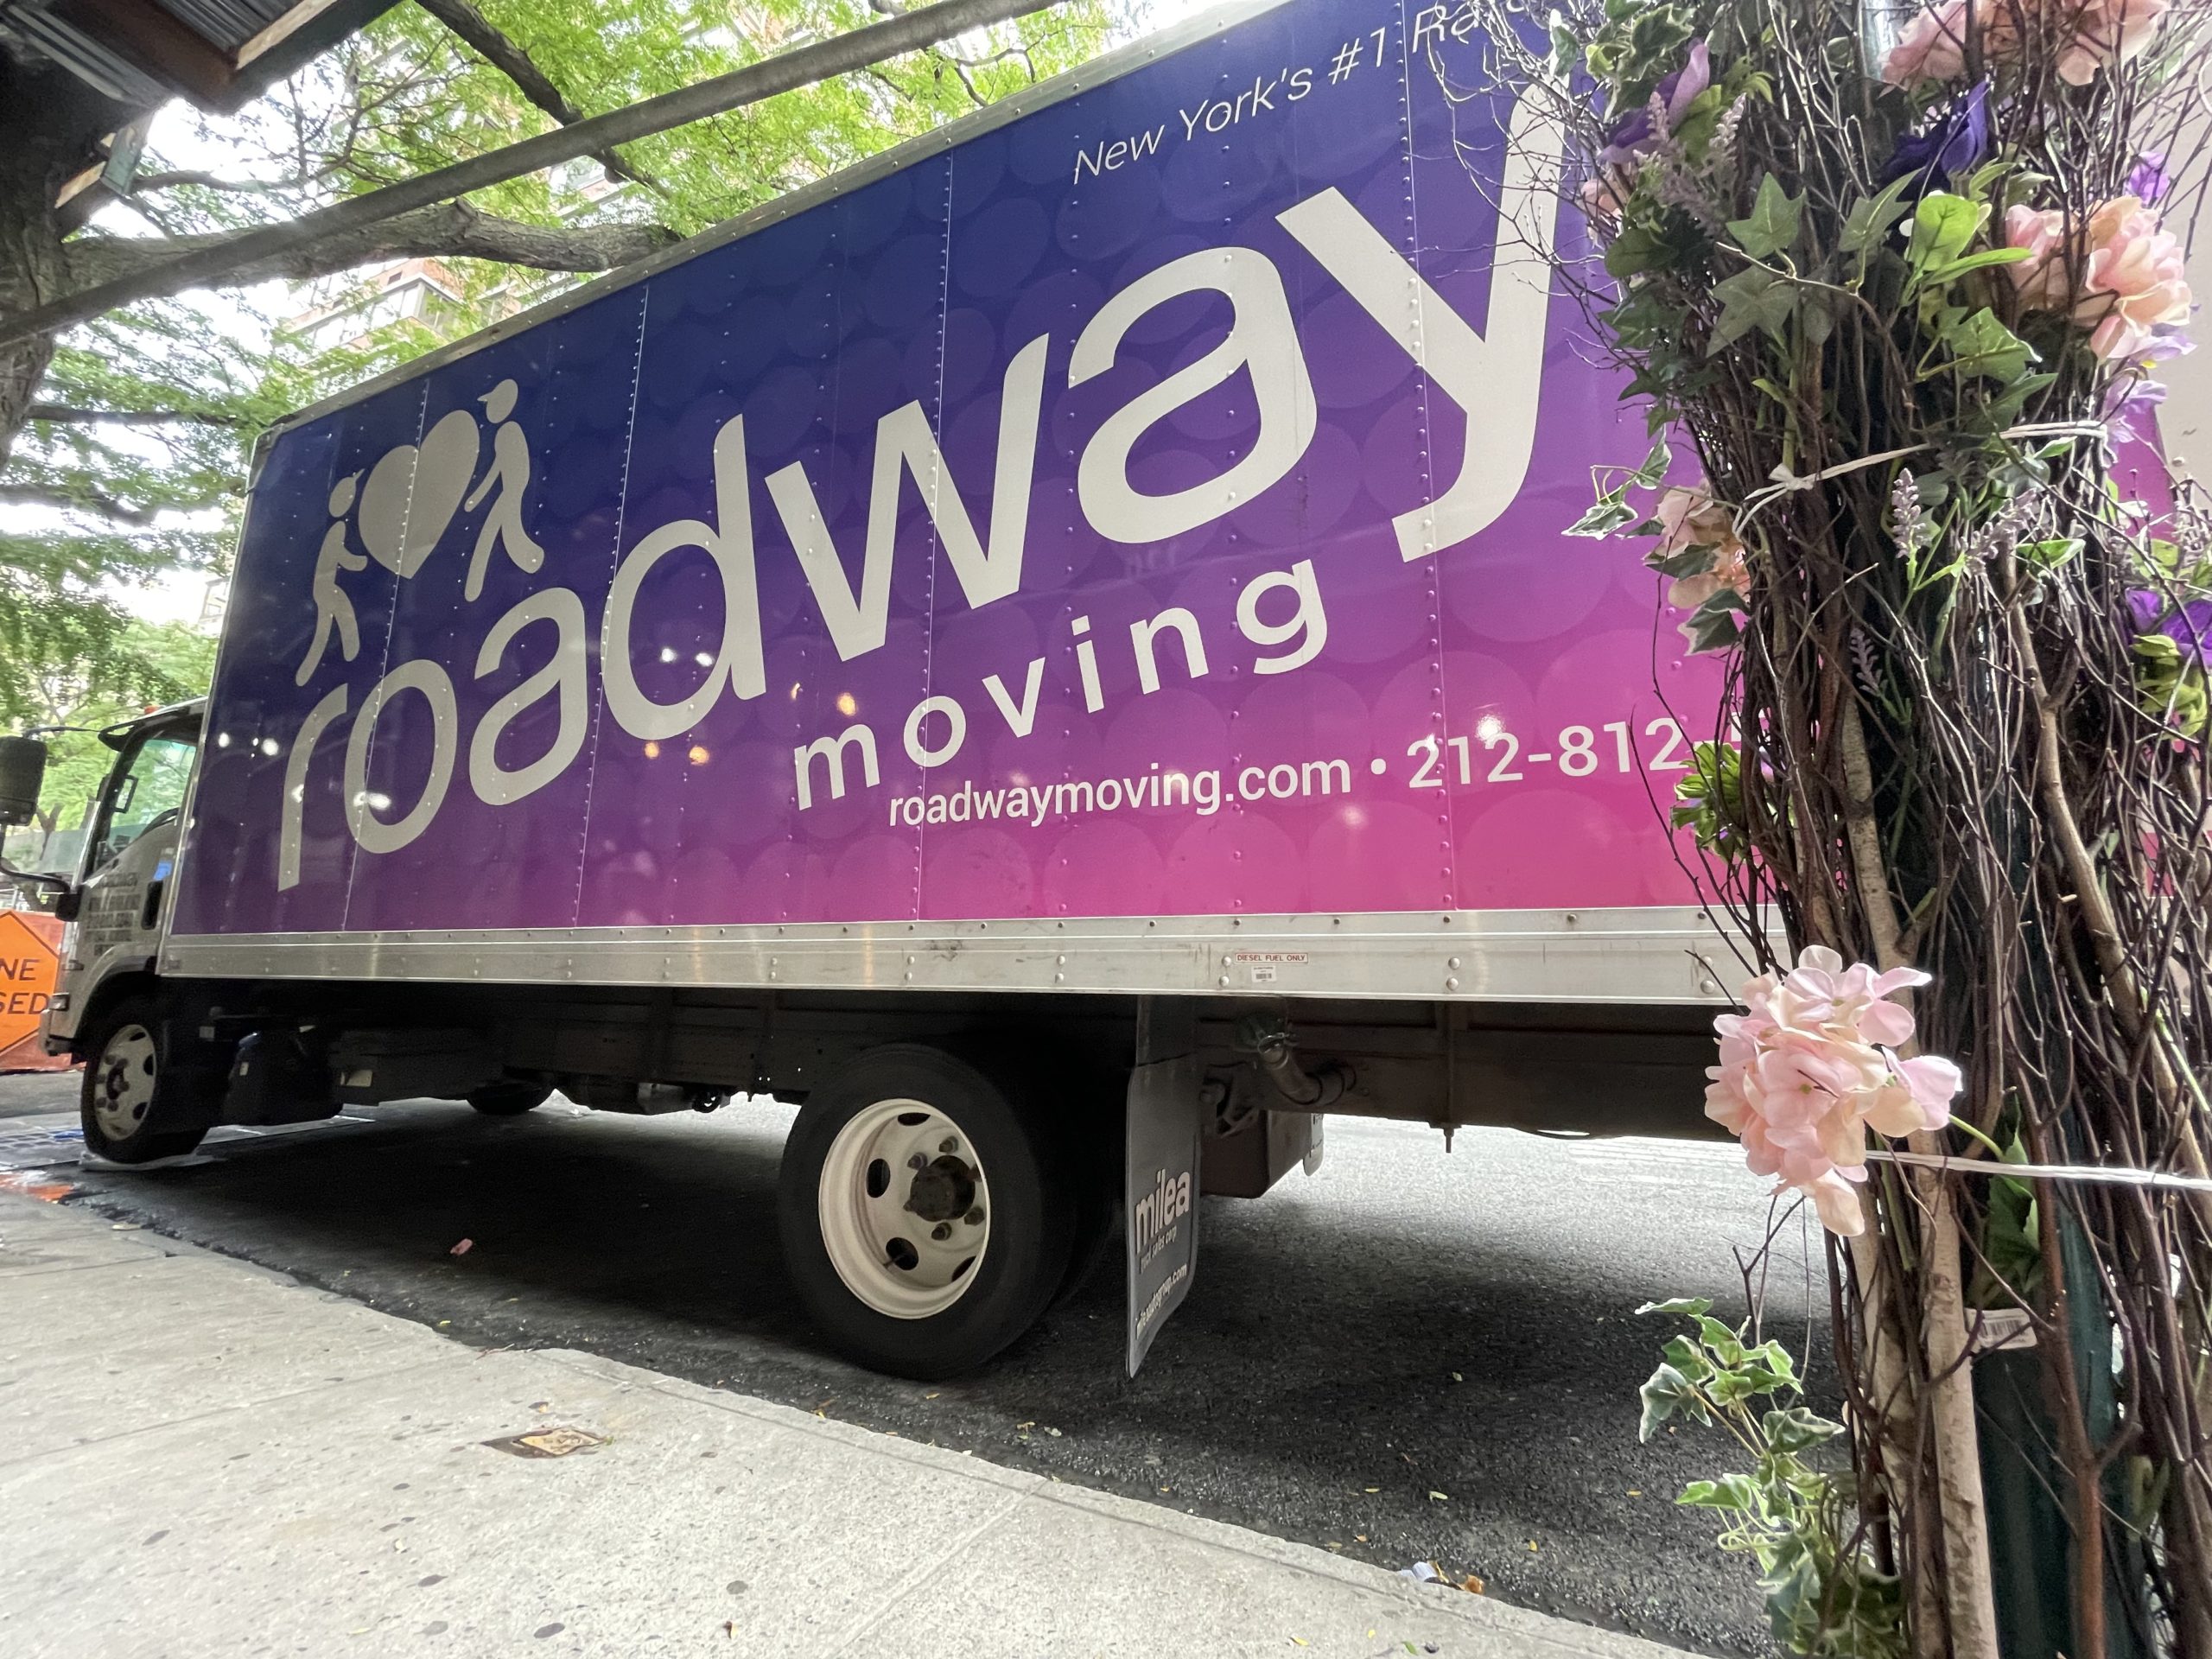 roadway moving truck, representing relocating during peak & non-peak moving season